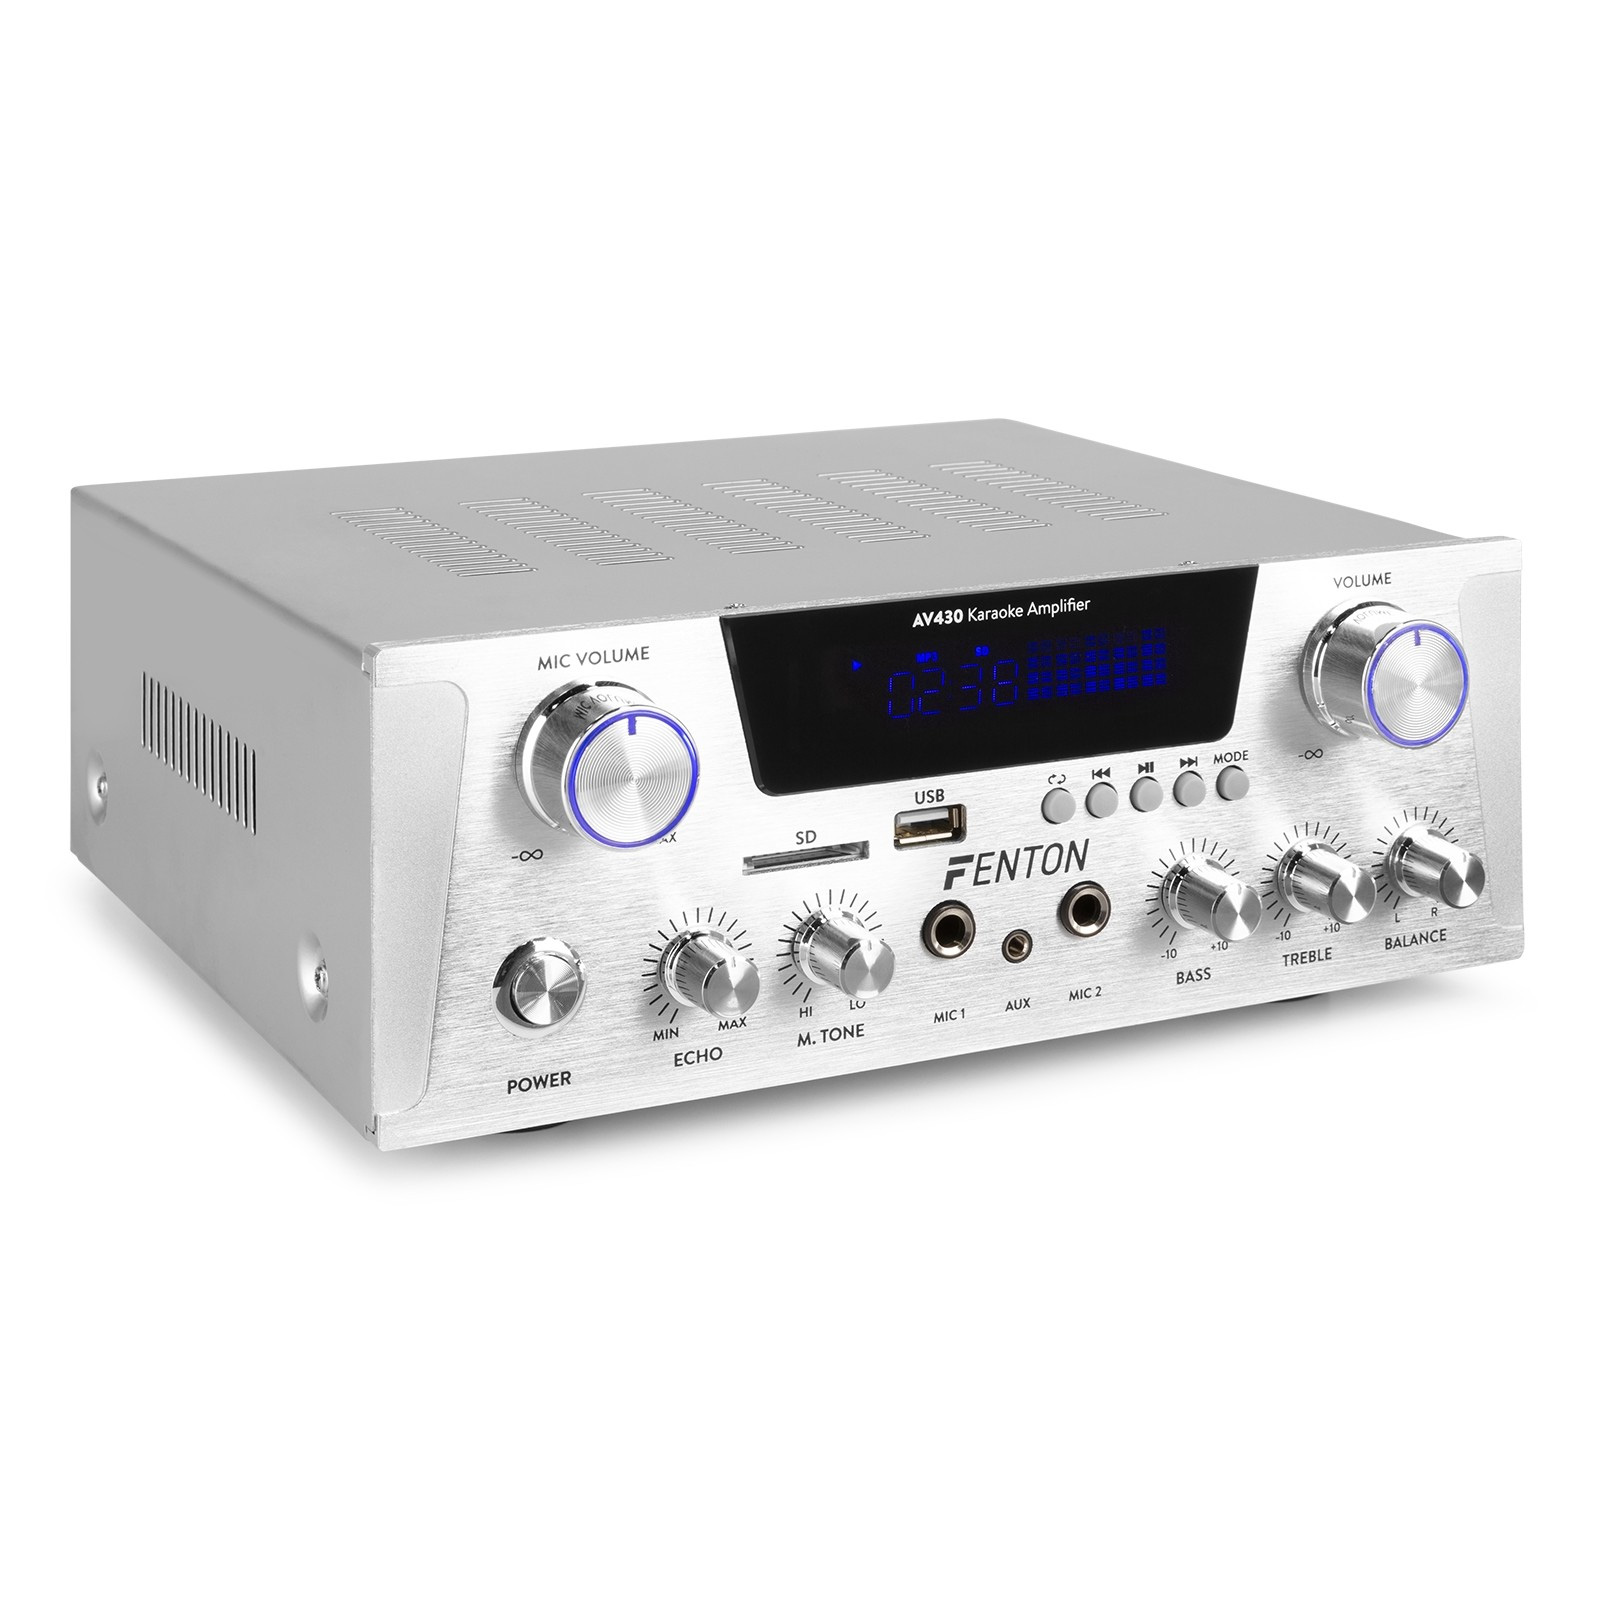 FENTON AV430A Stereo HiFi Karaoke Ενισχυτής USB/ MP3/ FM radio/ Bluetooth σε Ασημί χρώμα 103.317